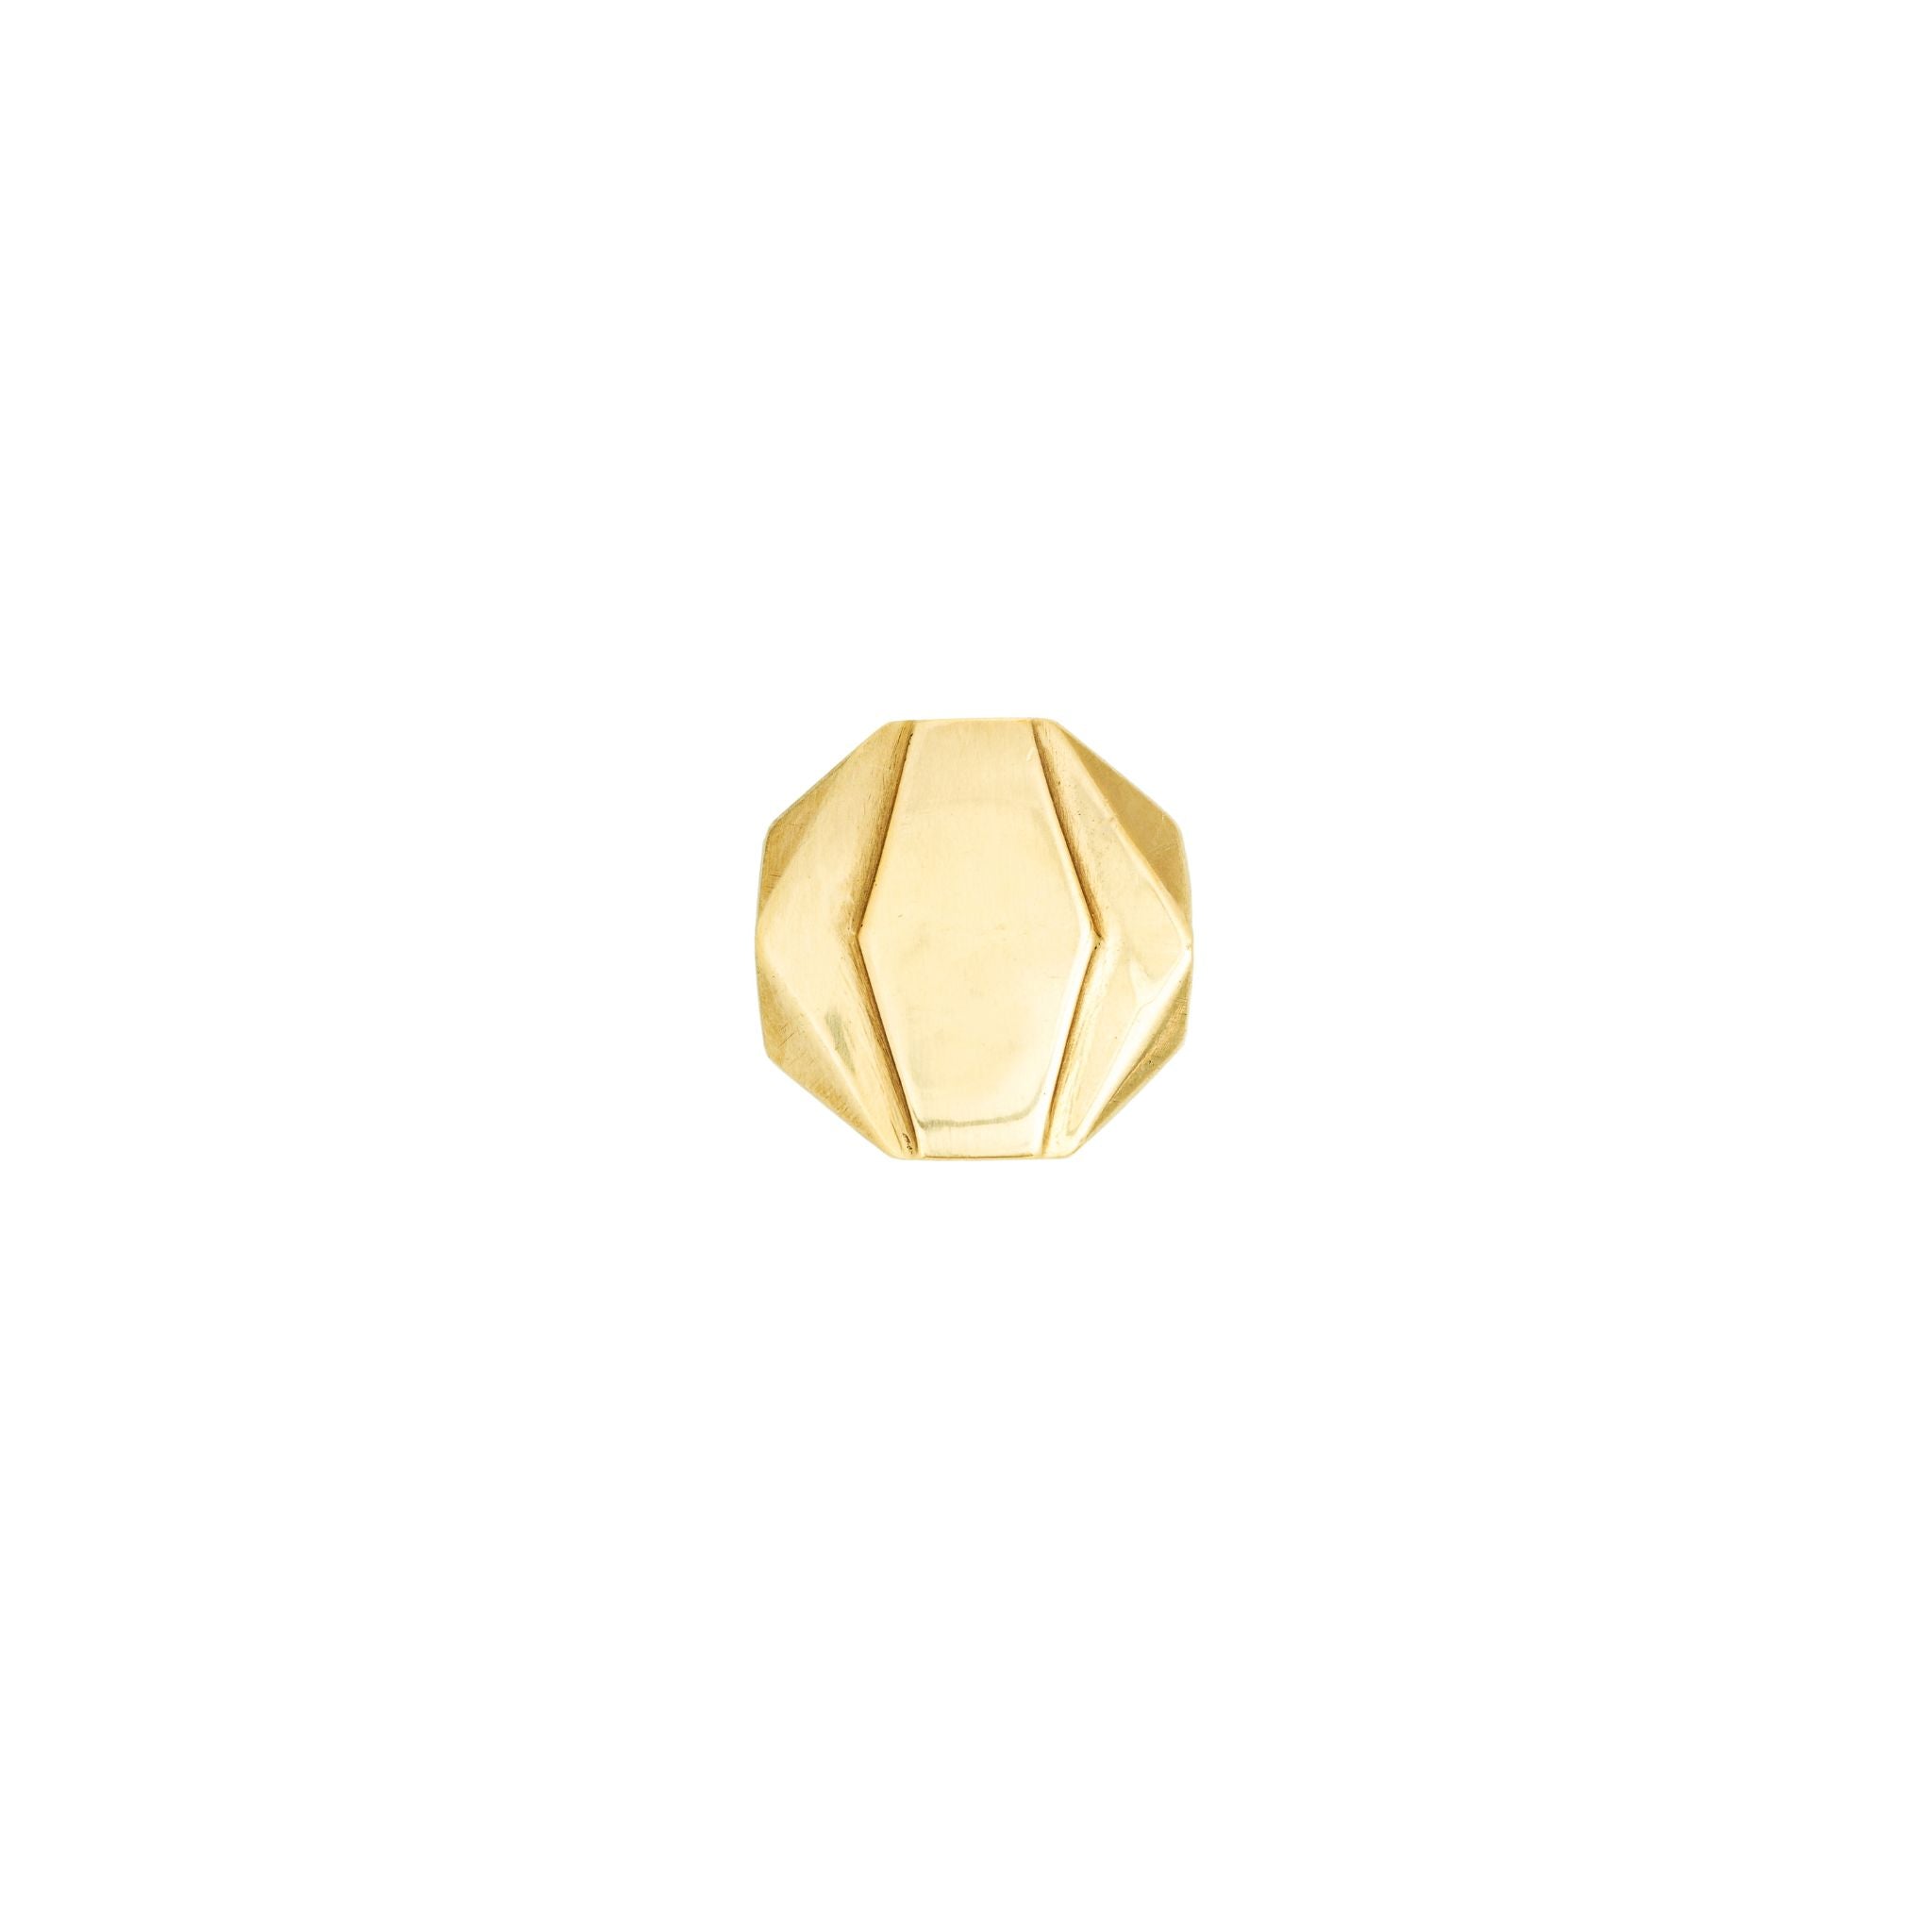 Novecento brass octagonal decorated knob - ilbronzetto